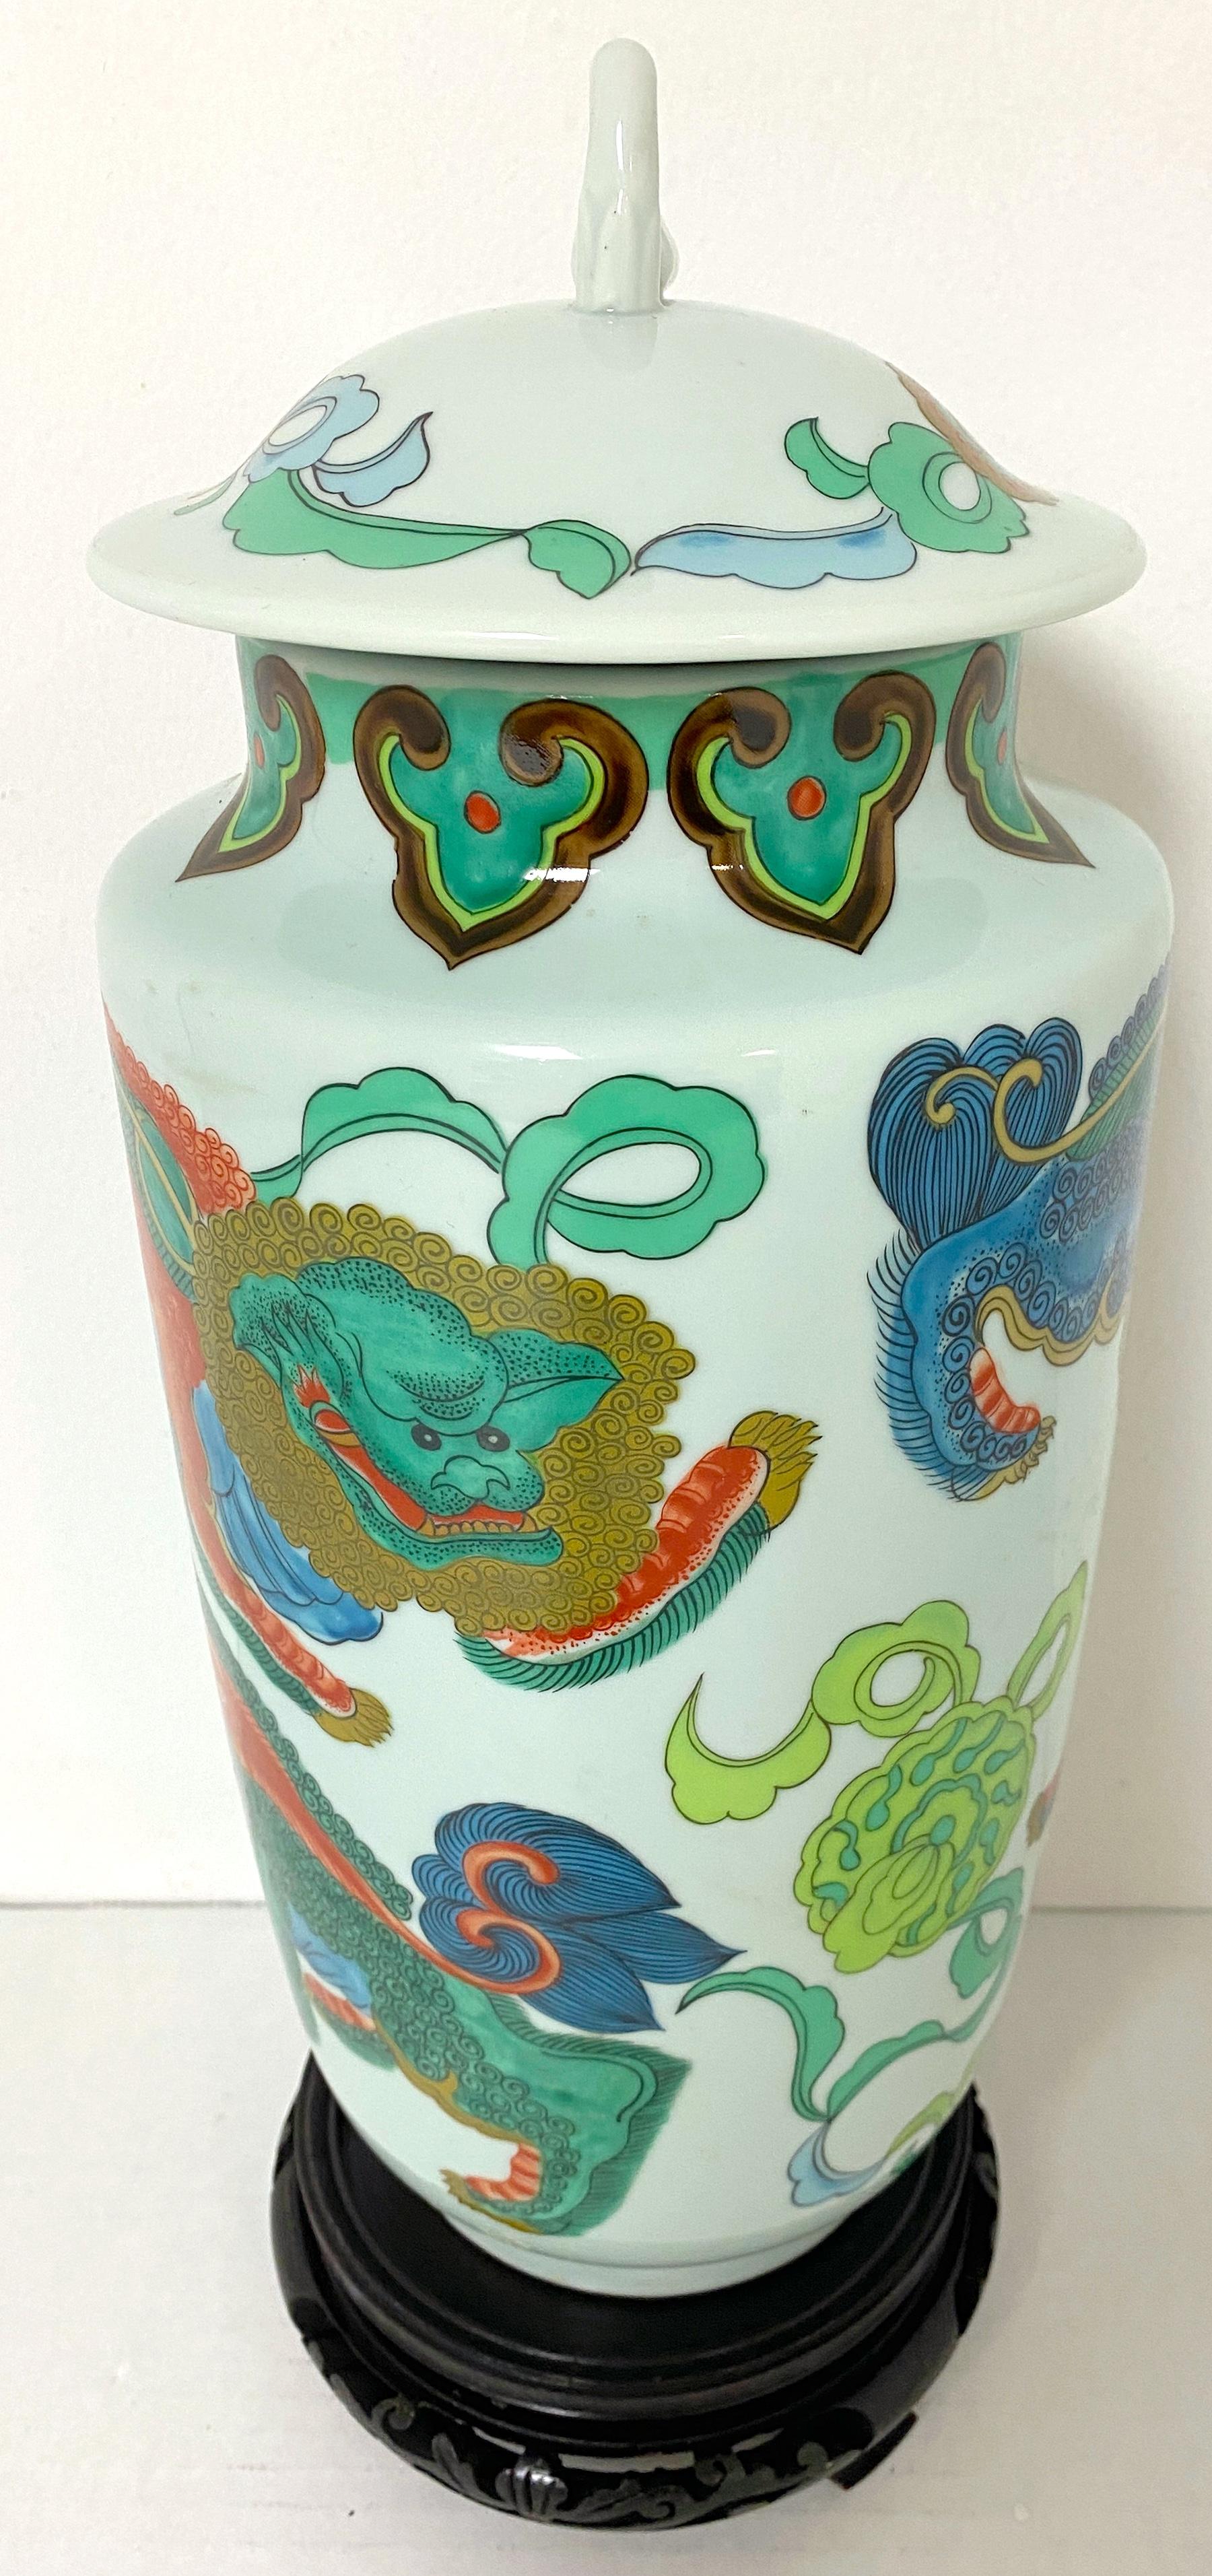 Porcelain Japanese Arita Foo dog Motif Covered Urn, with Carved Hardwood Stand  For Sale